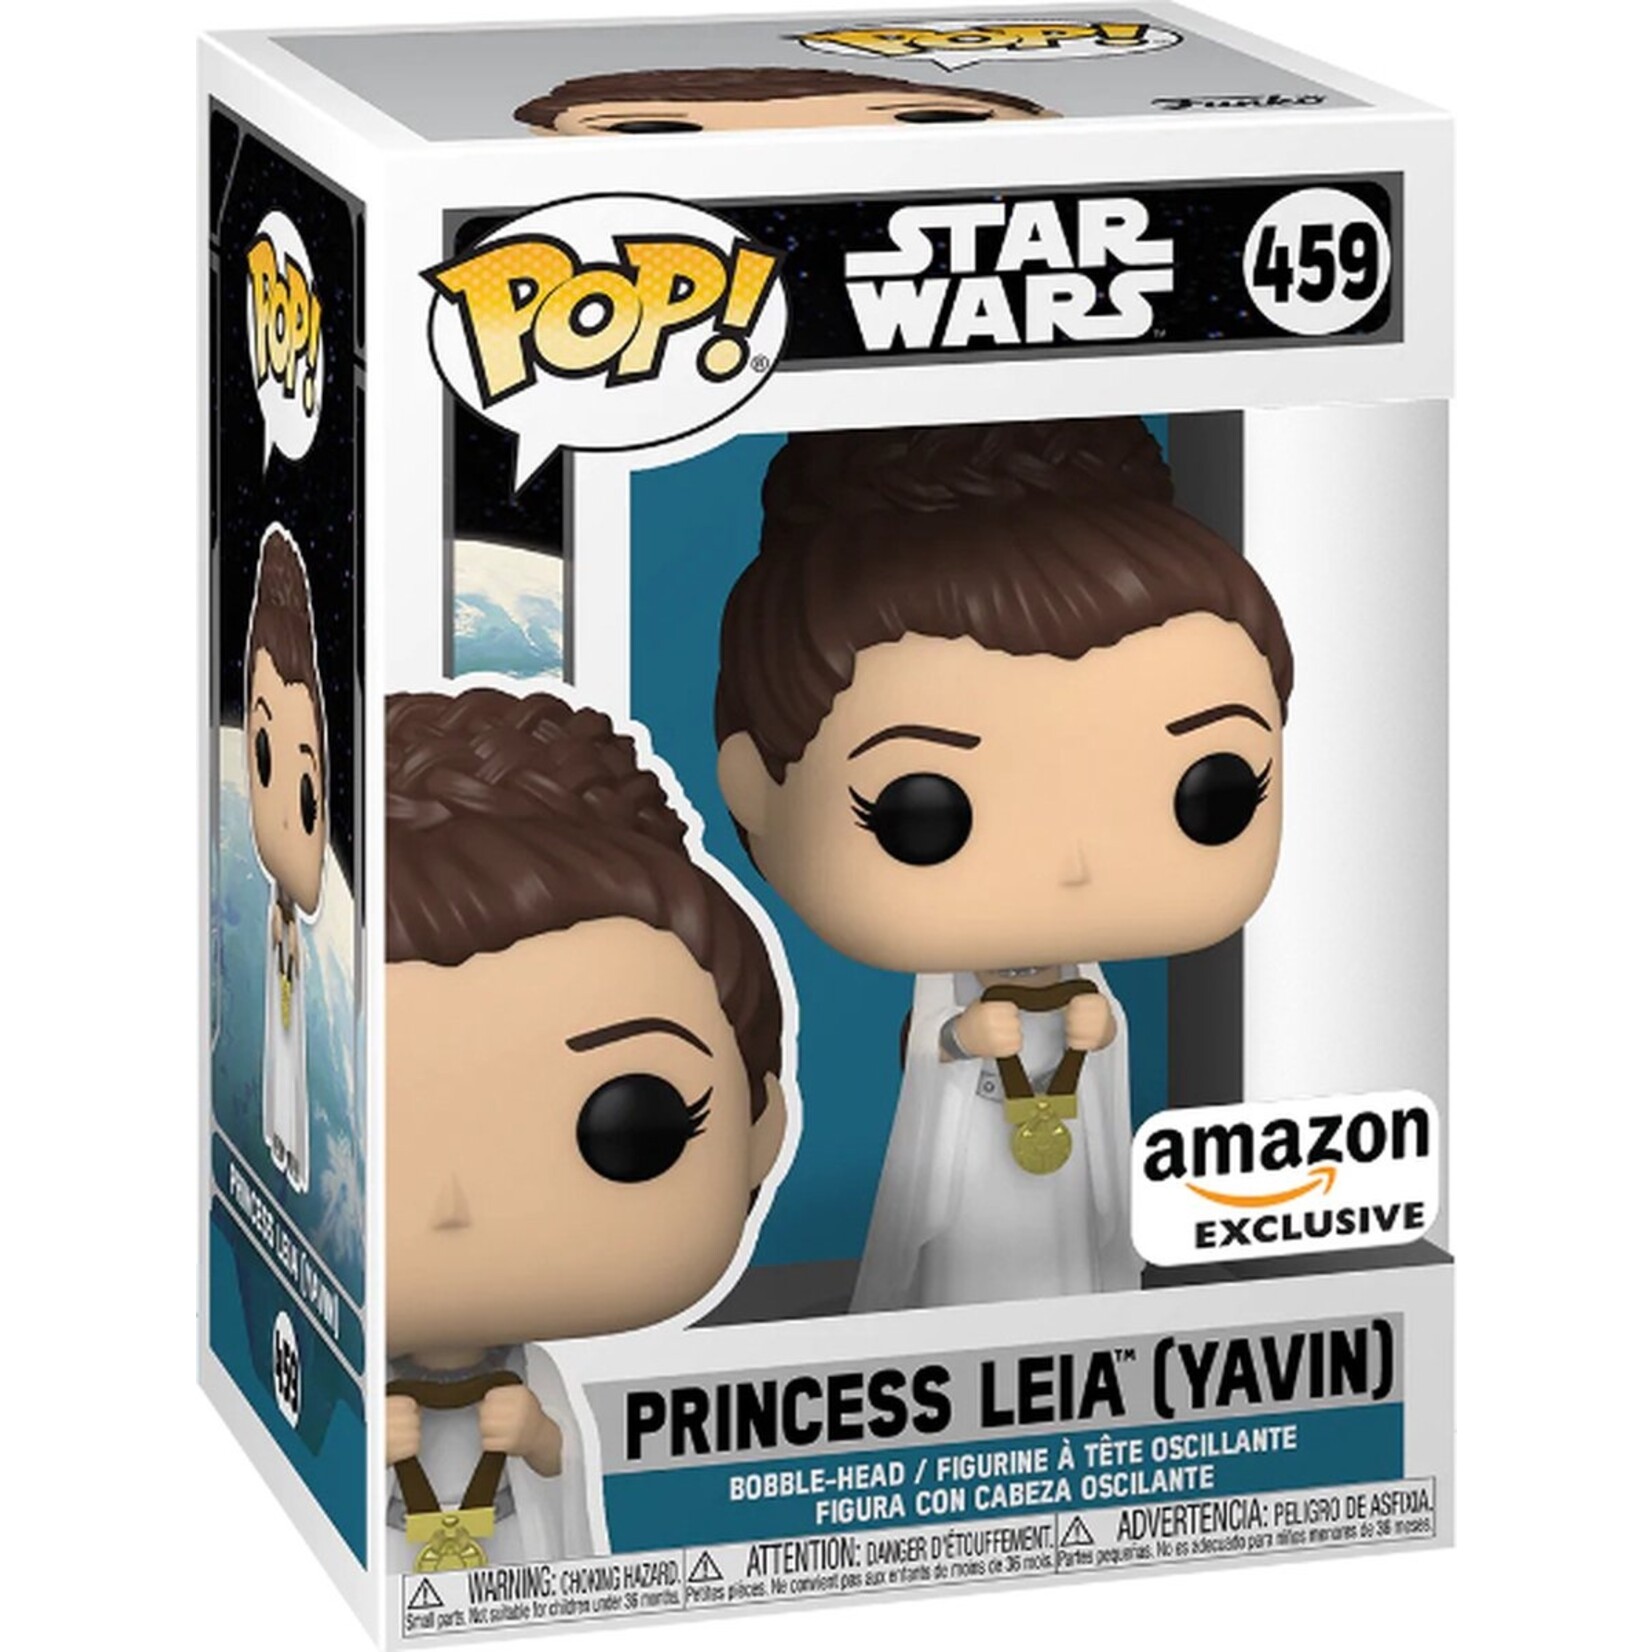 Funko POP! Star Wars princess Leia Yavin 459 Exclusive